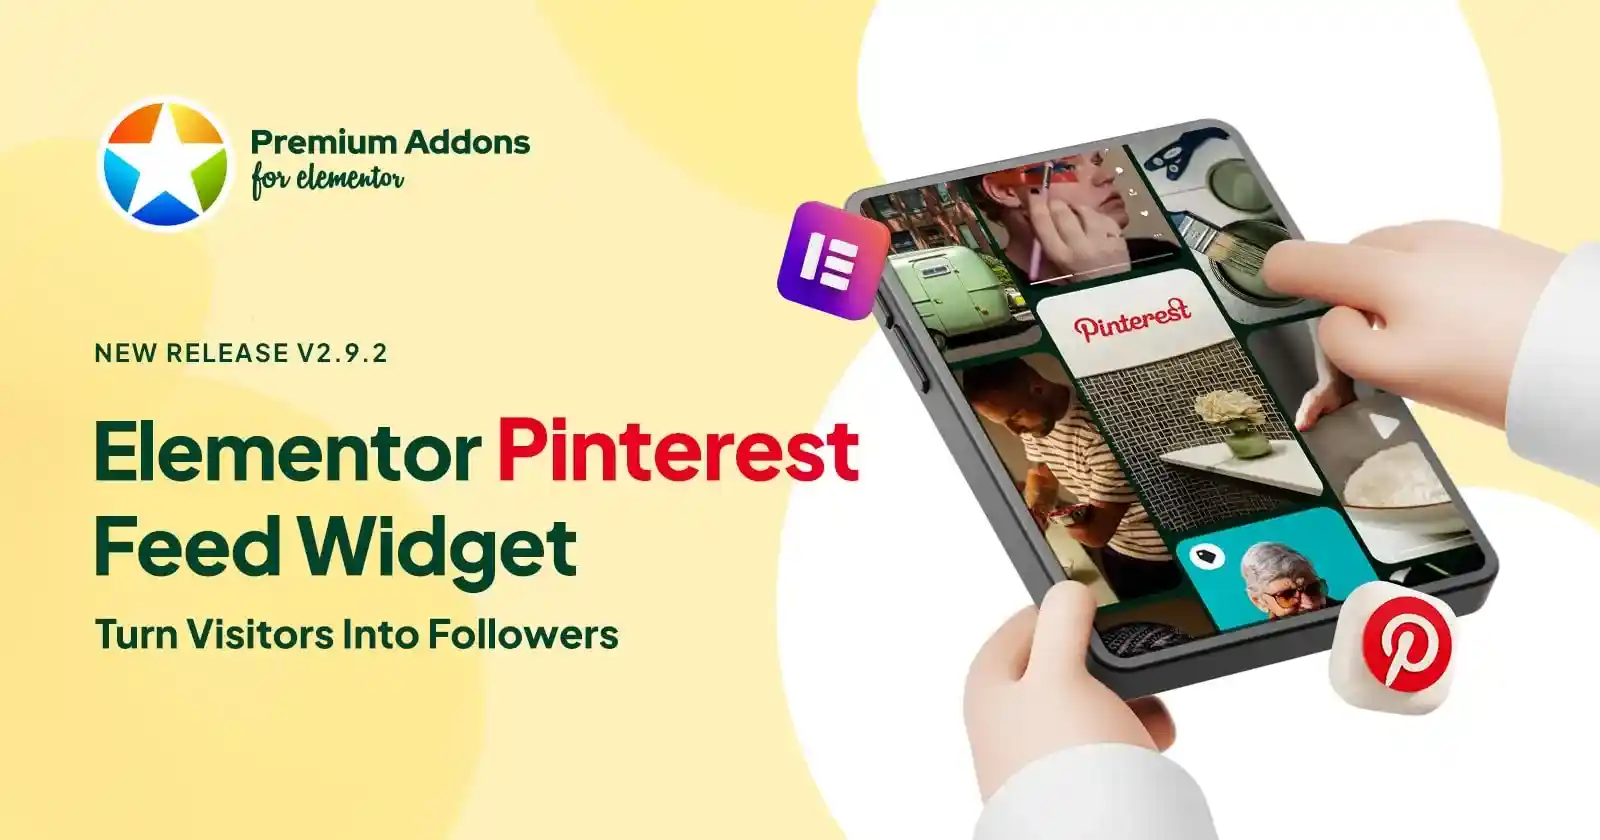 Elementor Pinterest Feed Widget in Premium Addons Plugin